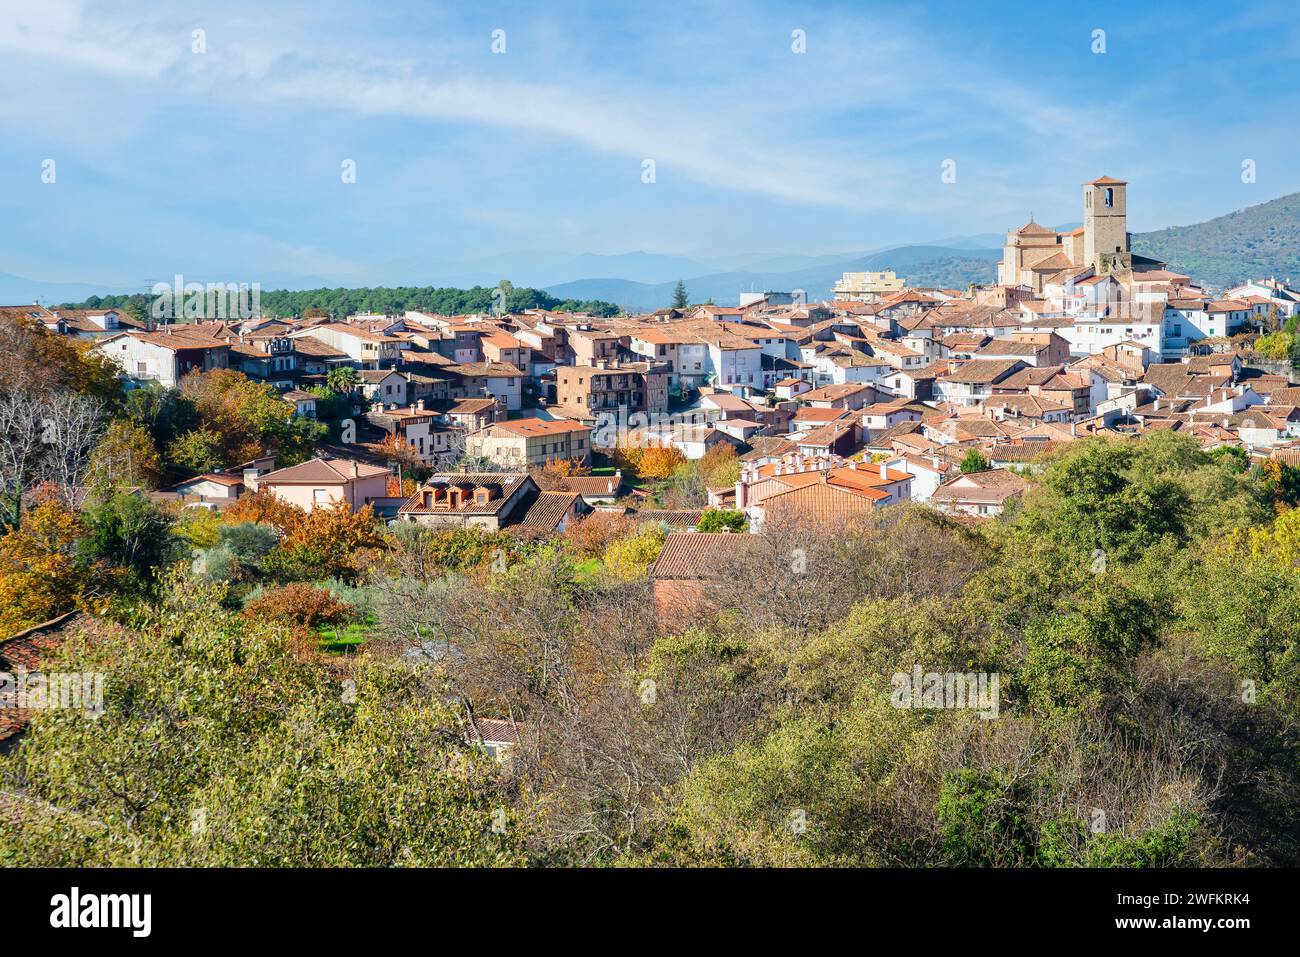 Vista panoramica del villaggio di Hervas a Caceres, Spagna. Foto Stock